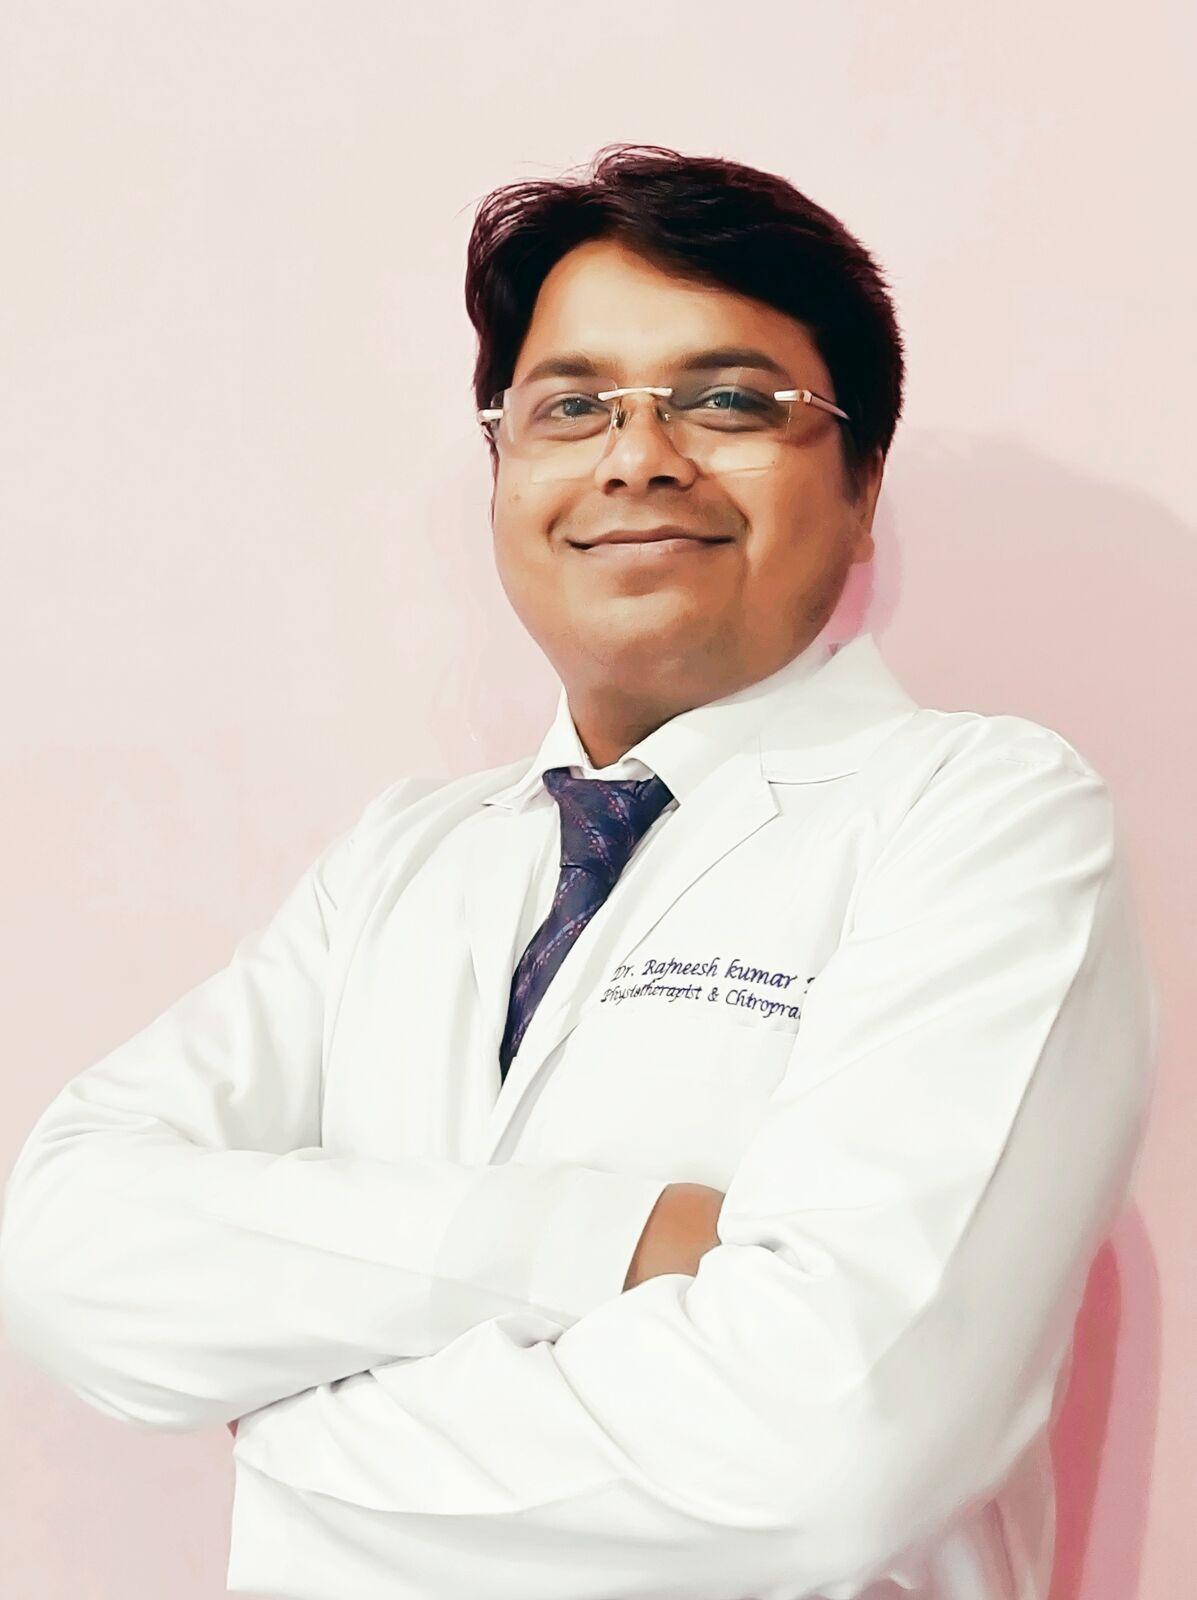 Dr. Rajneesh Kumar PT